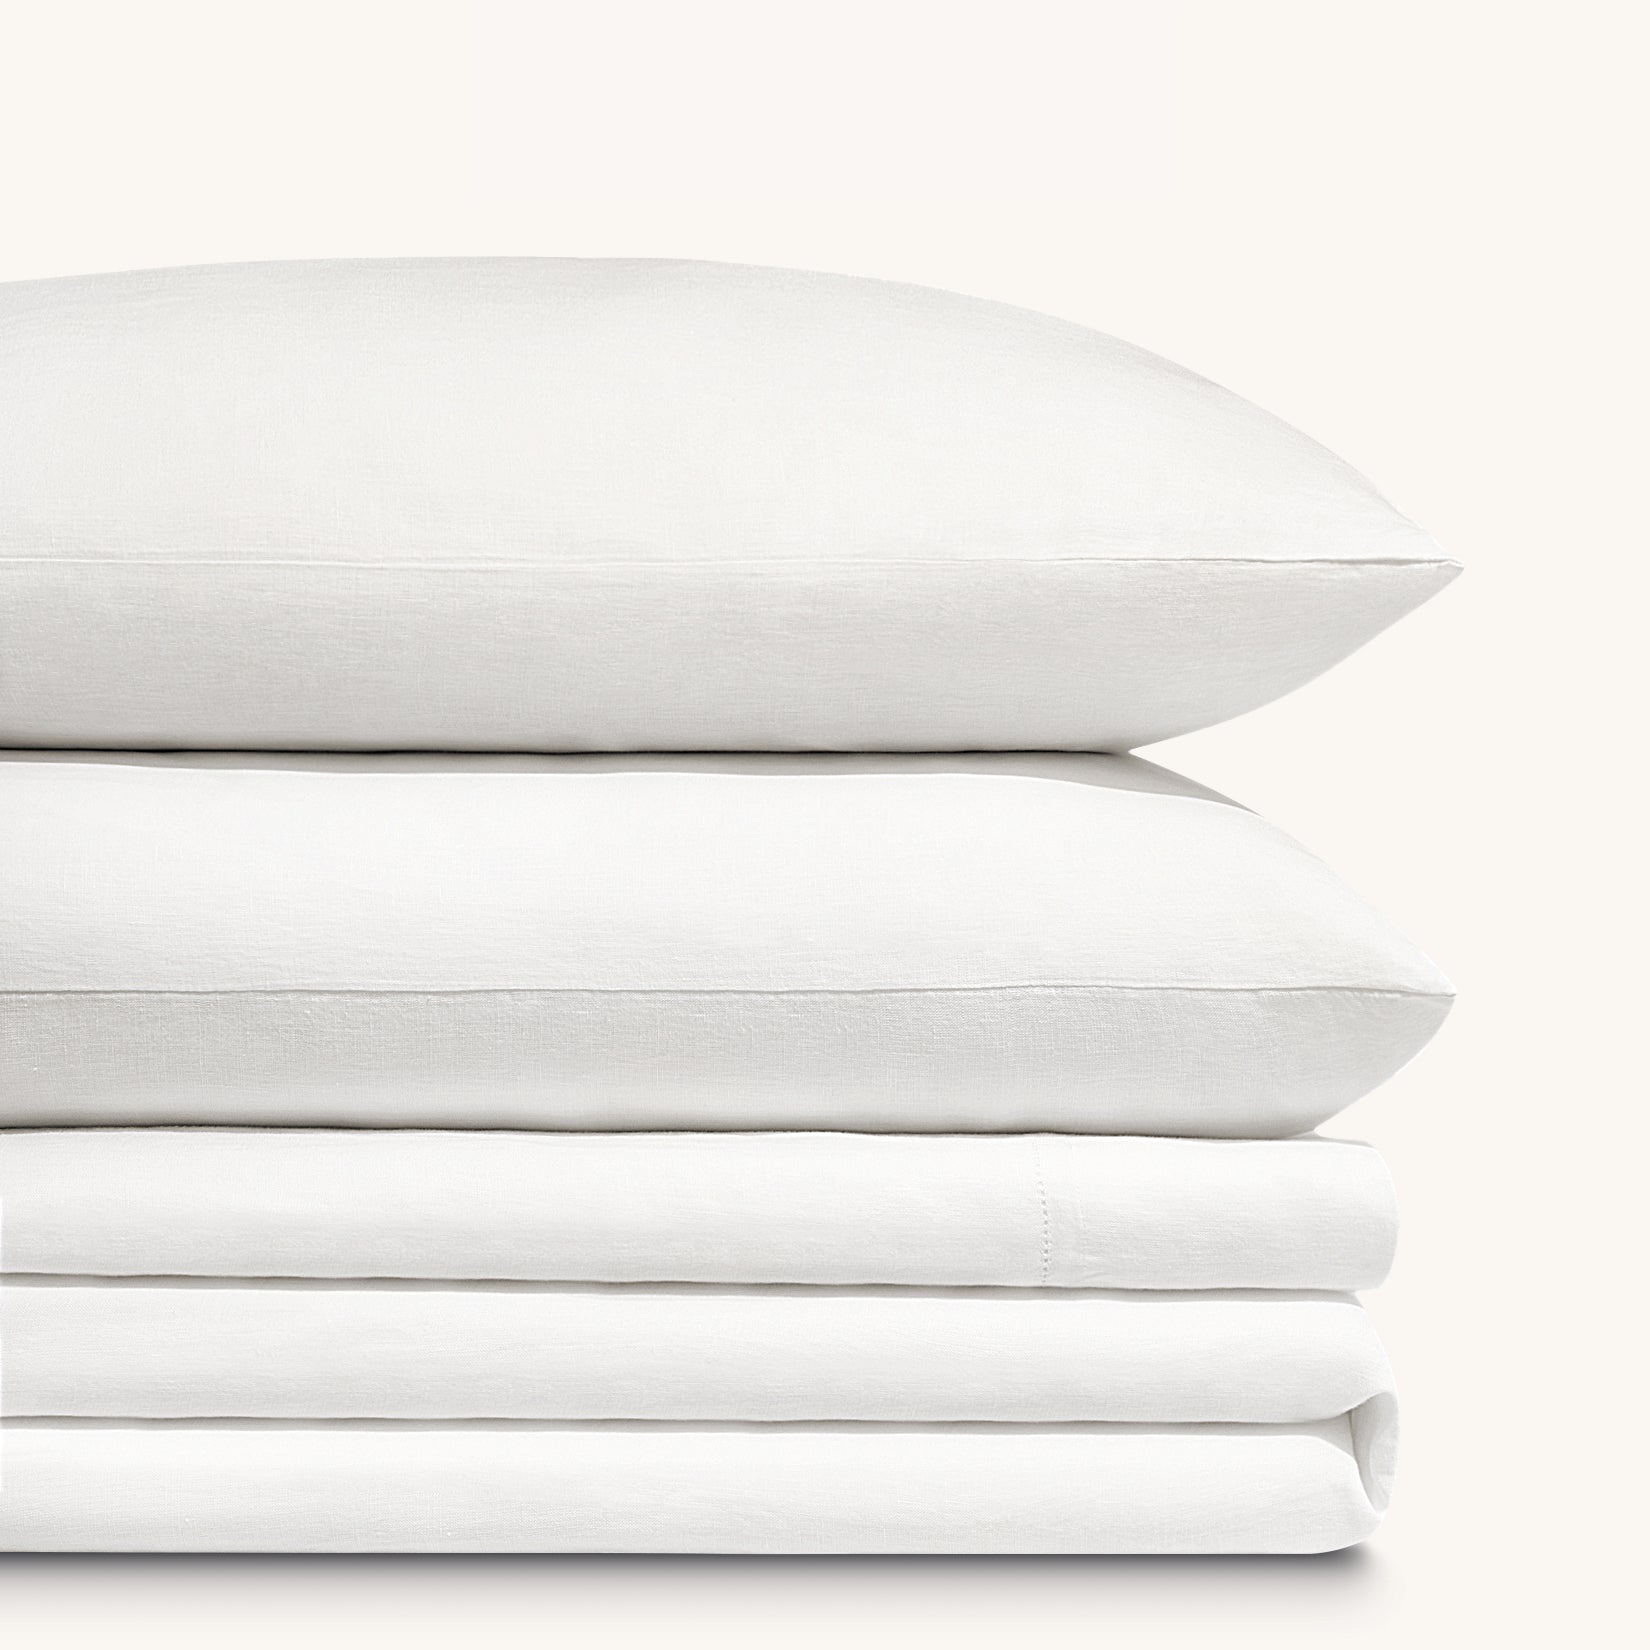 Olivia soft white linen bed sheet set. Two soft white linen pillows stacked on folded soft white linen sheet set.